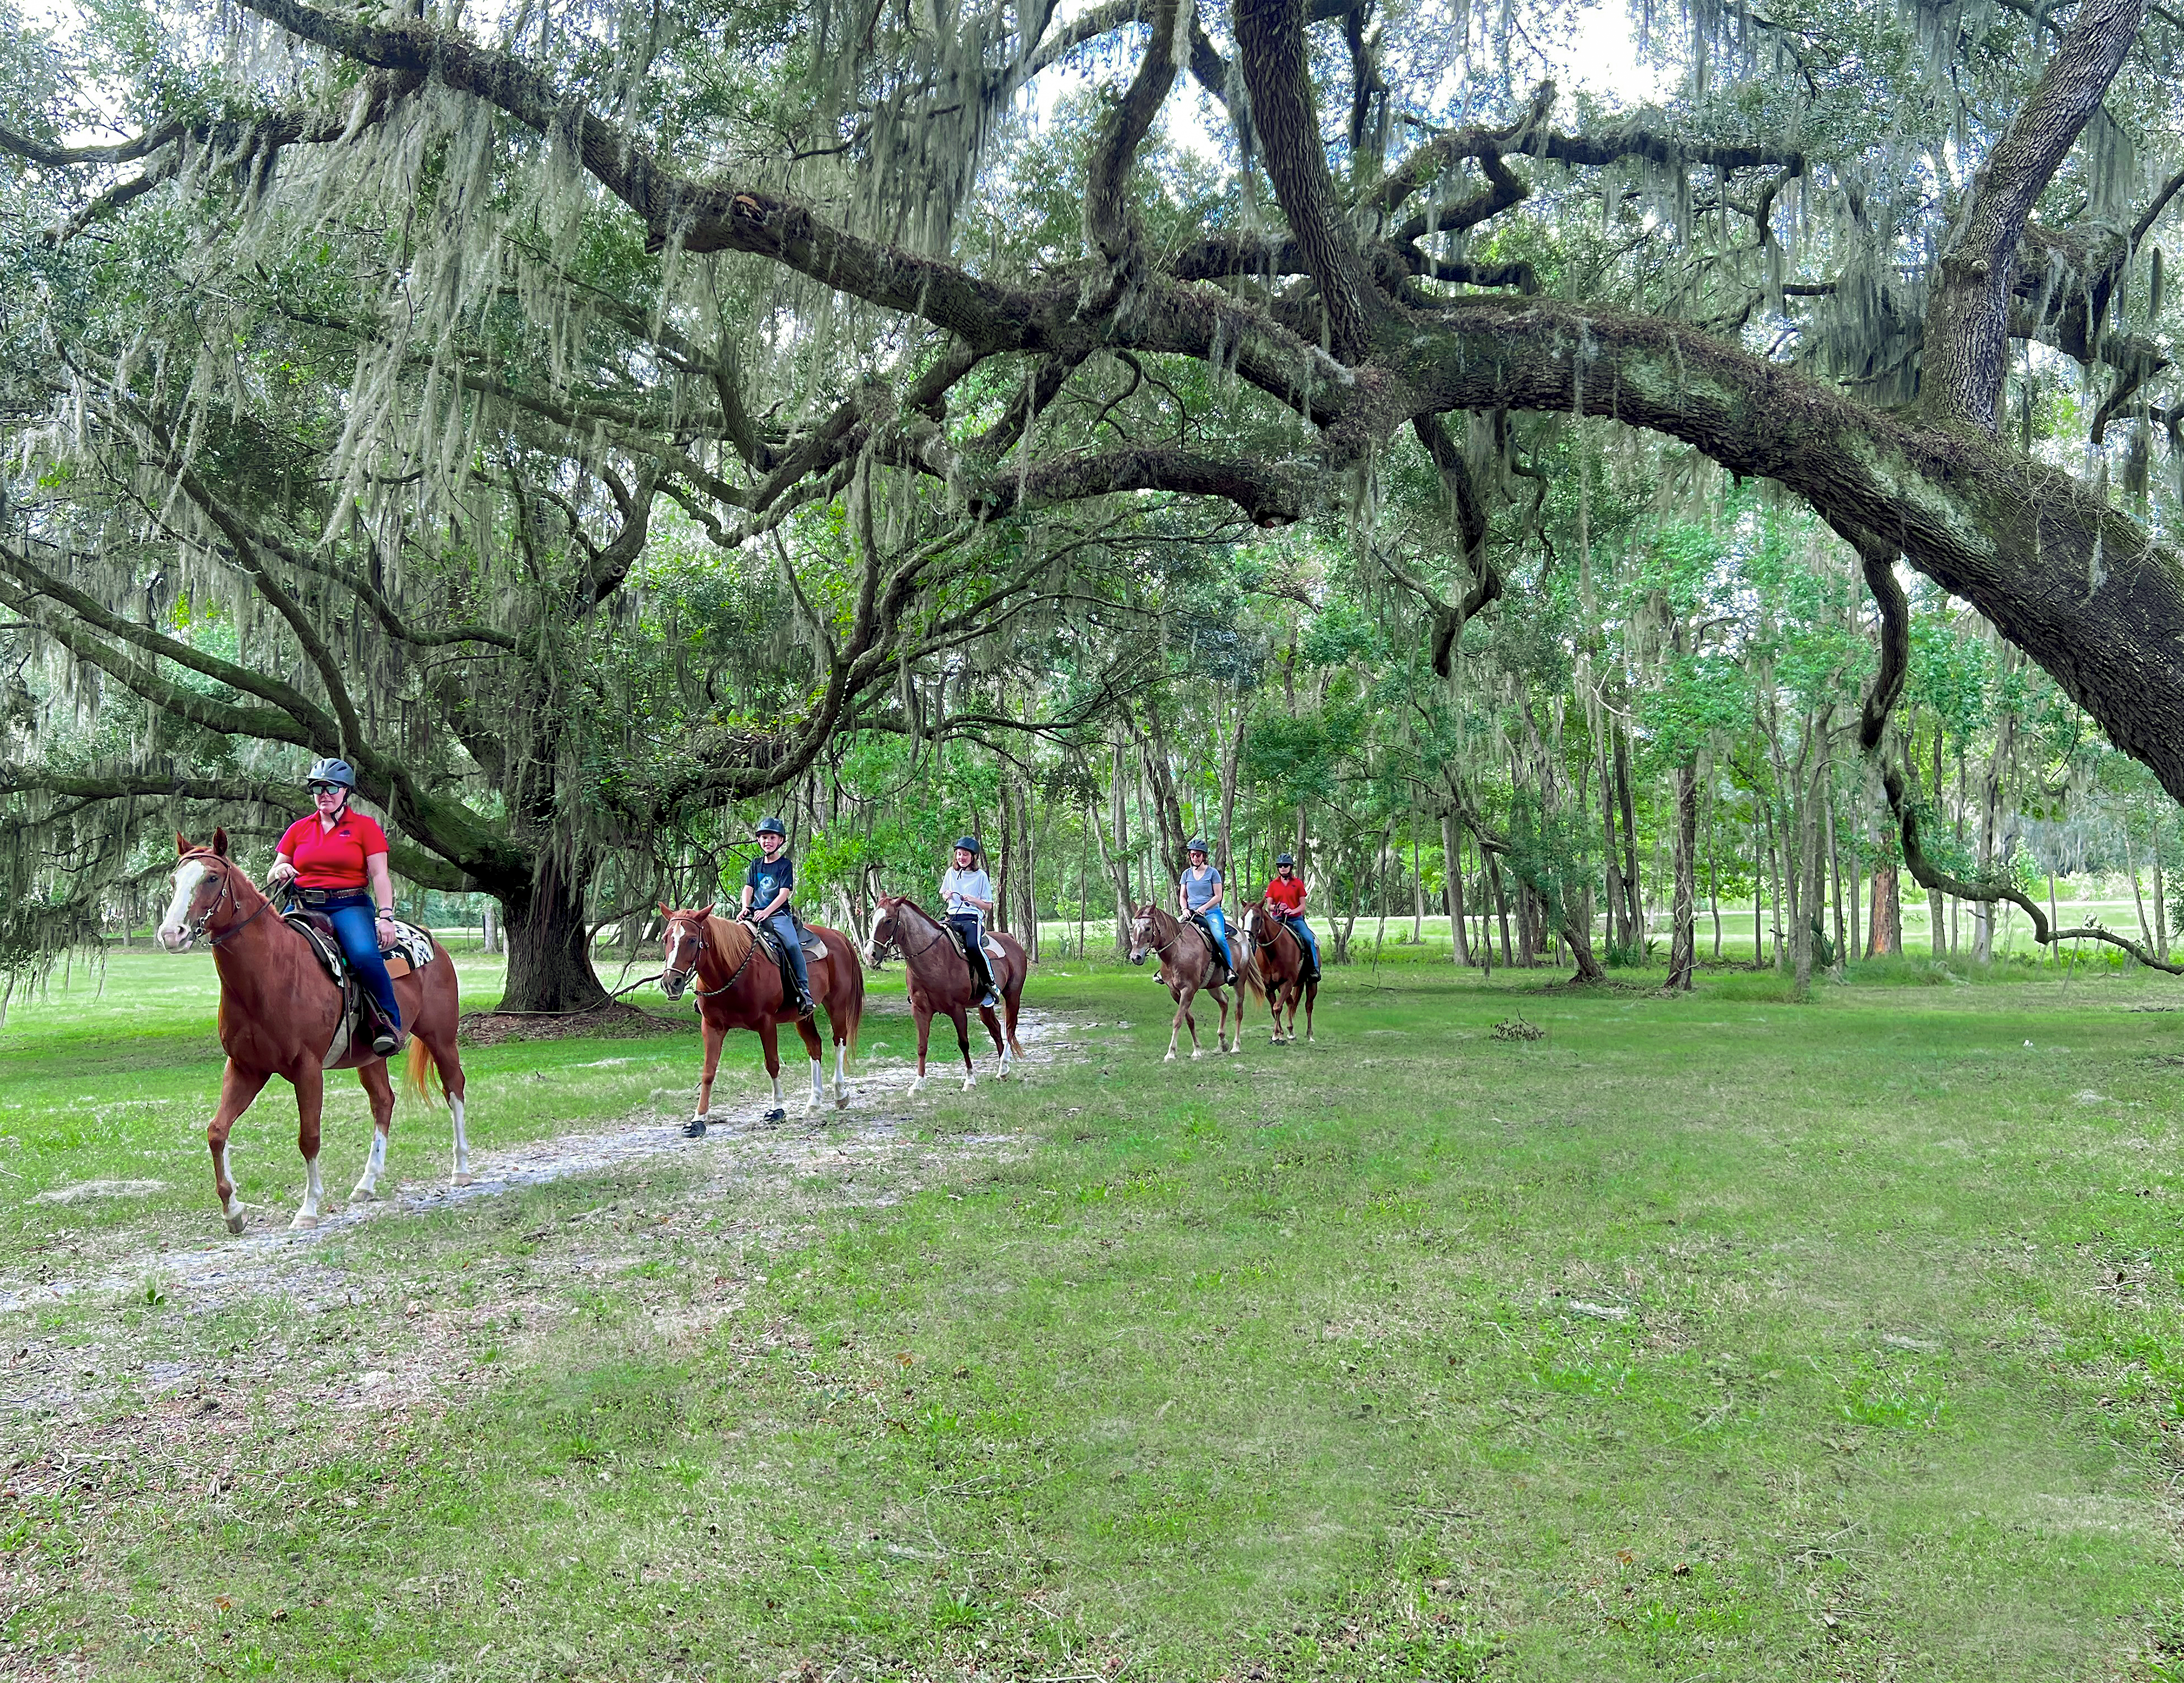 Horseback riders walk under oak trees draped with Spanish moss.